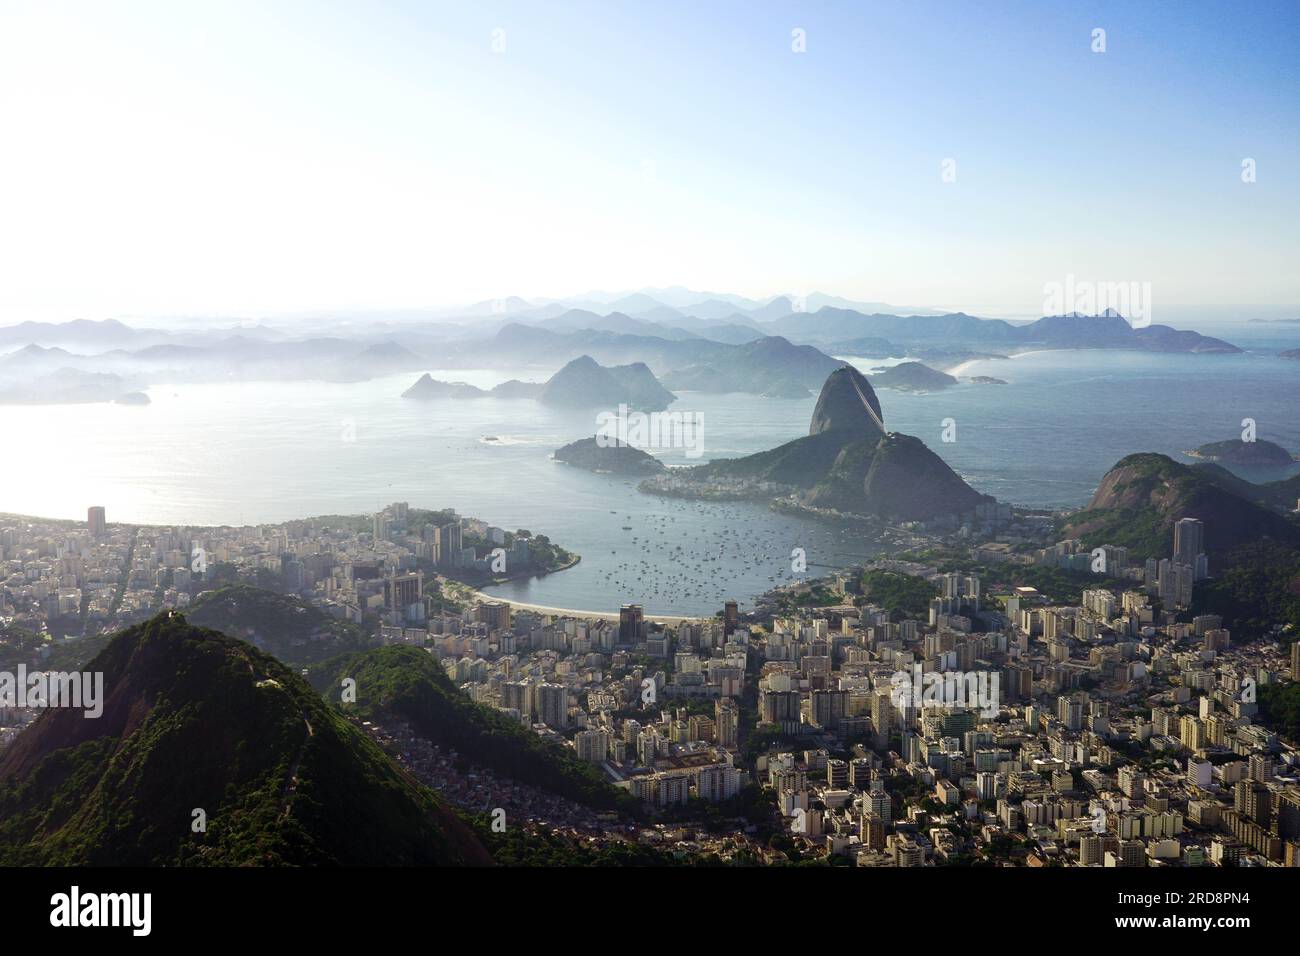 Aerial view of famous Guanabara Bay from Corcovado mountain in Rio de Janeiro, Brazil Stock Photo